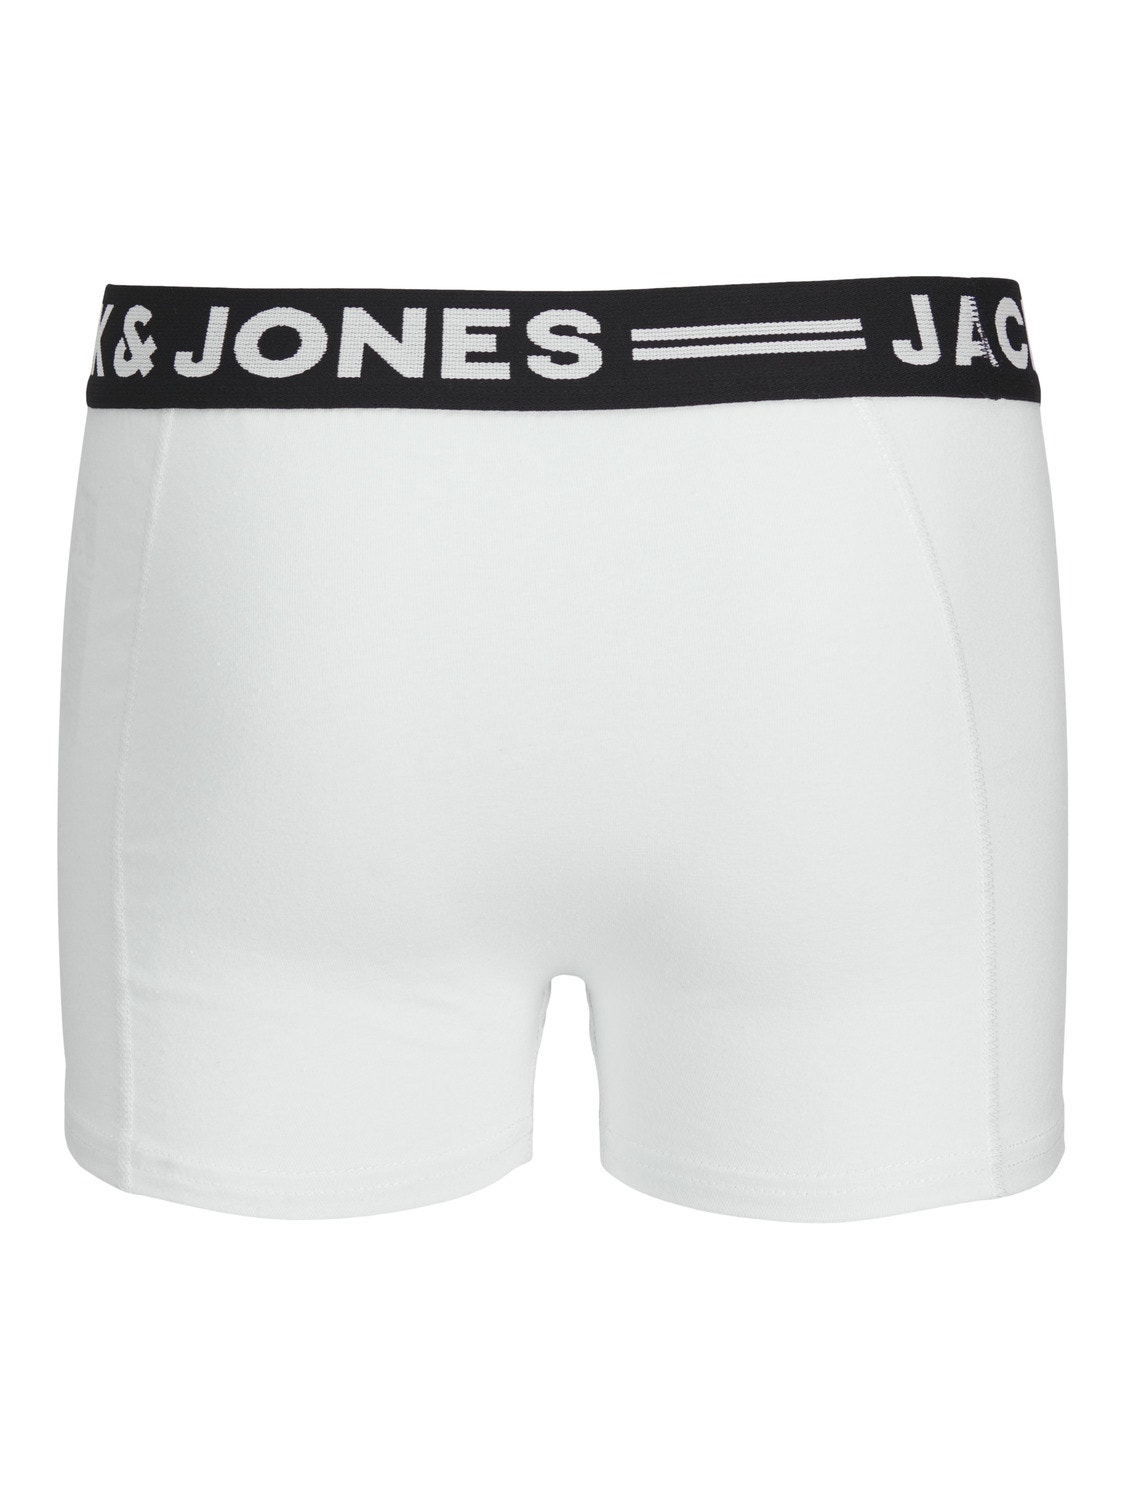 Jack & Jones 3-balení Trenýrky Junior -Light Grey Melange - 12149293